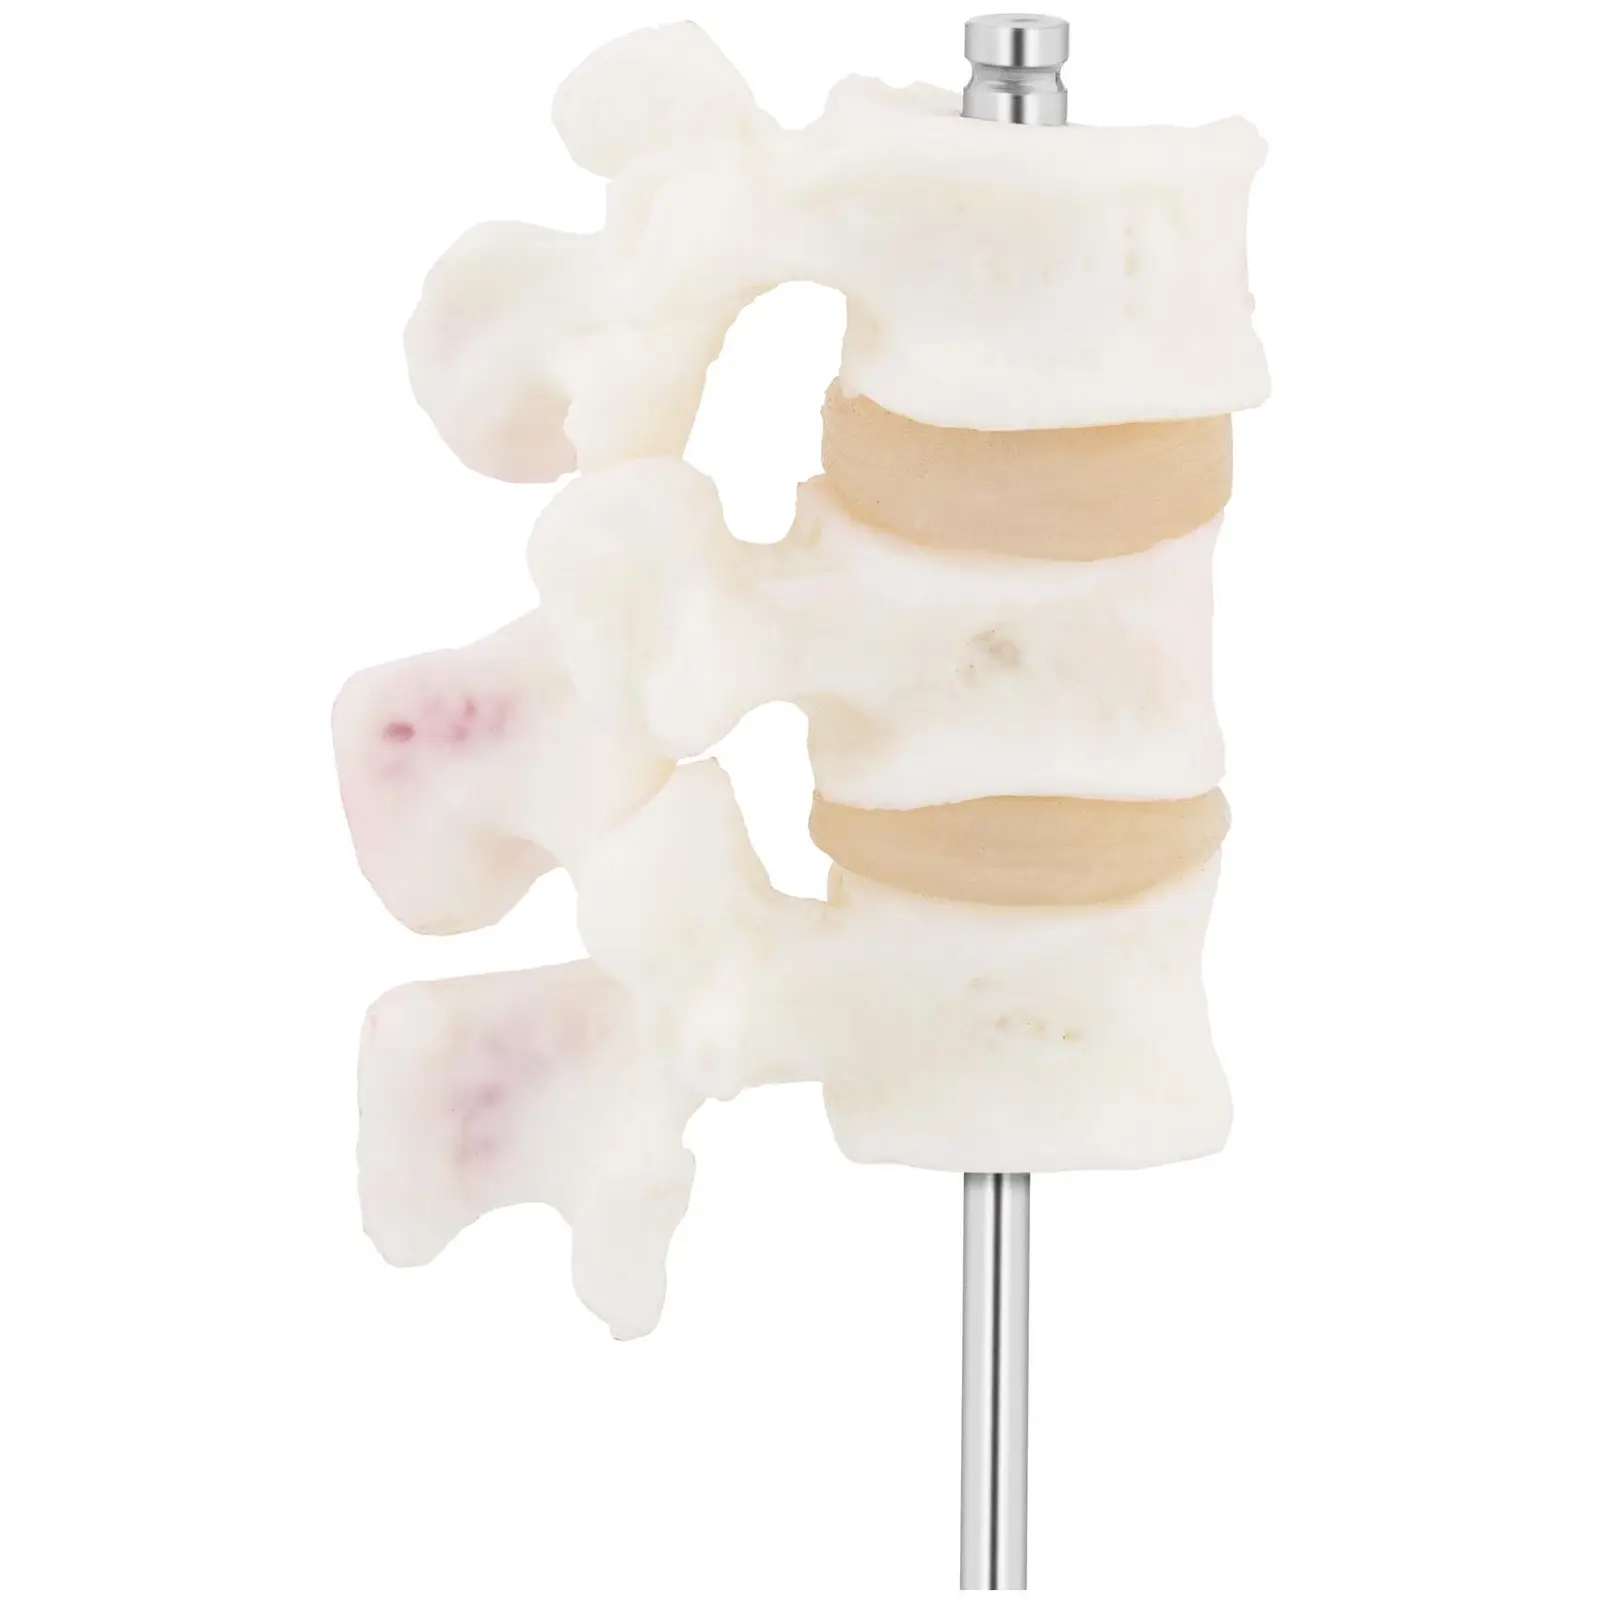 Osteoporose lombar - modelo anatómico